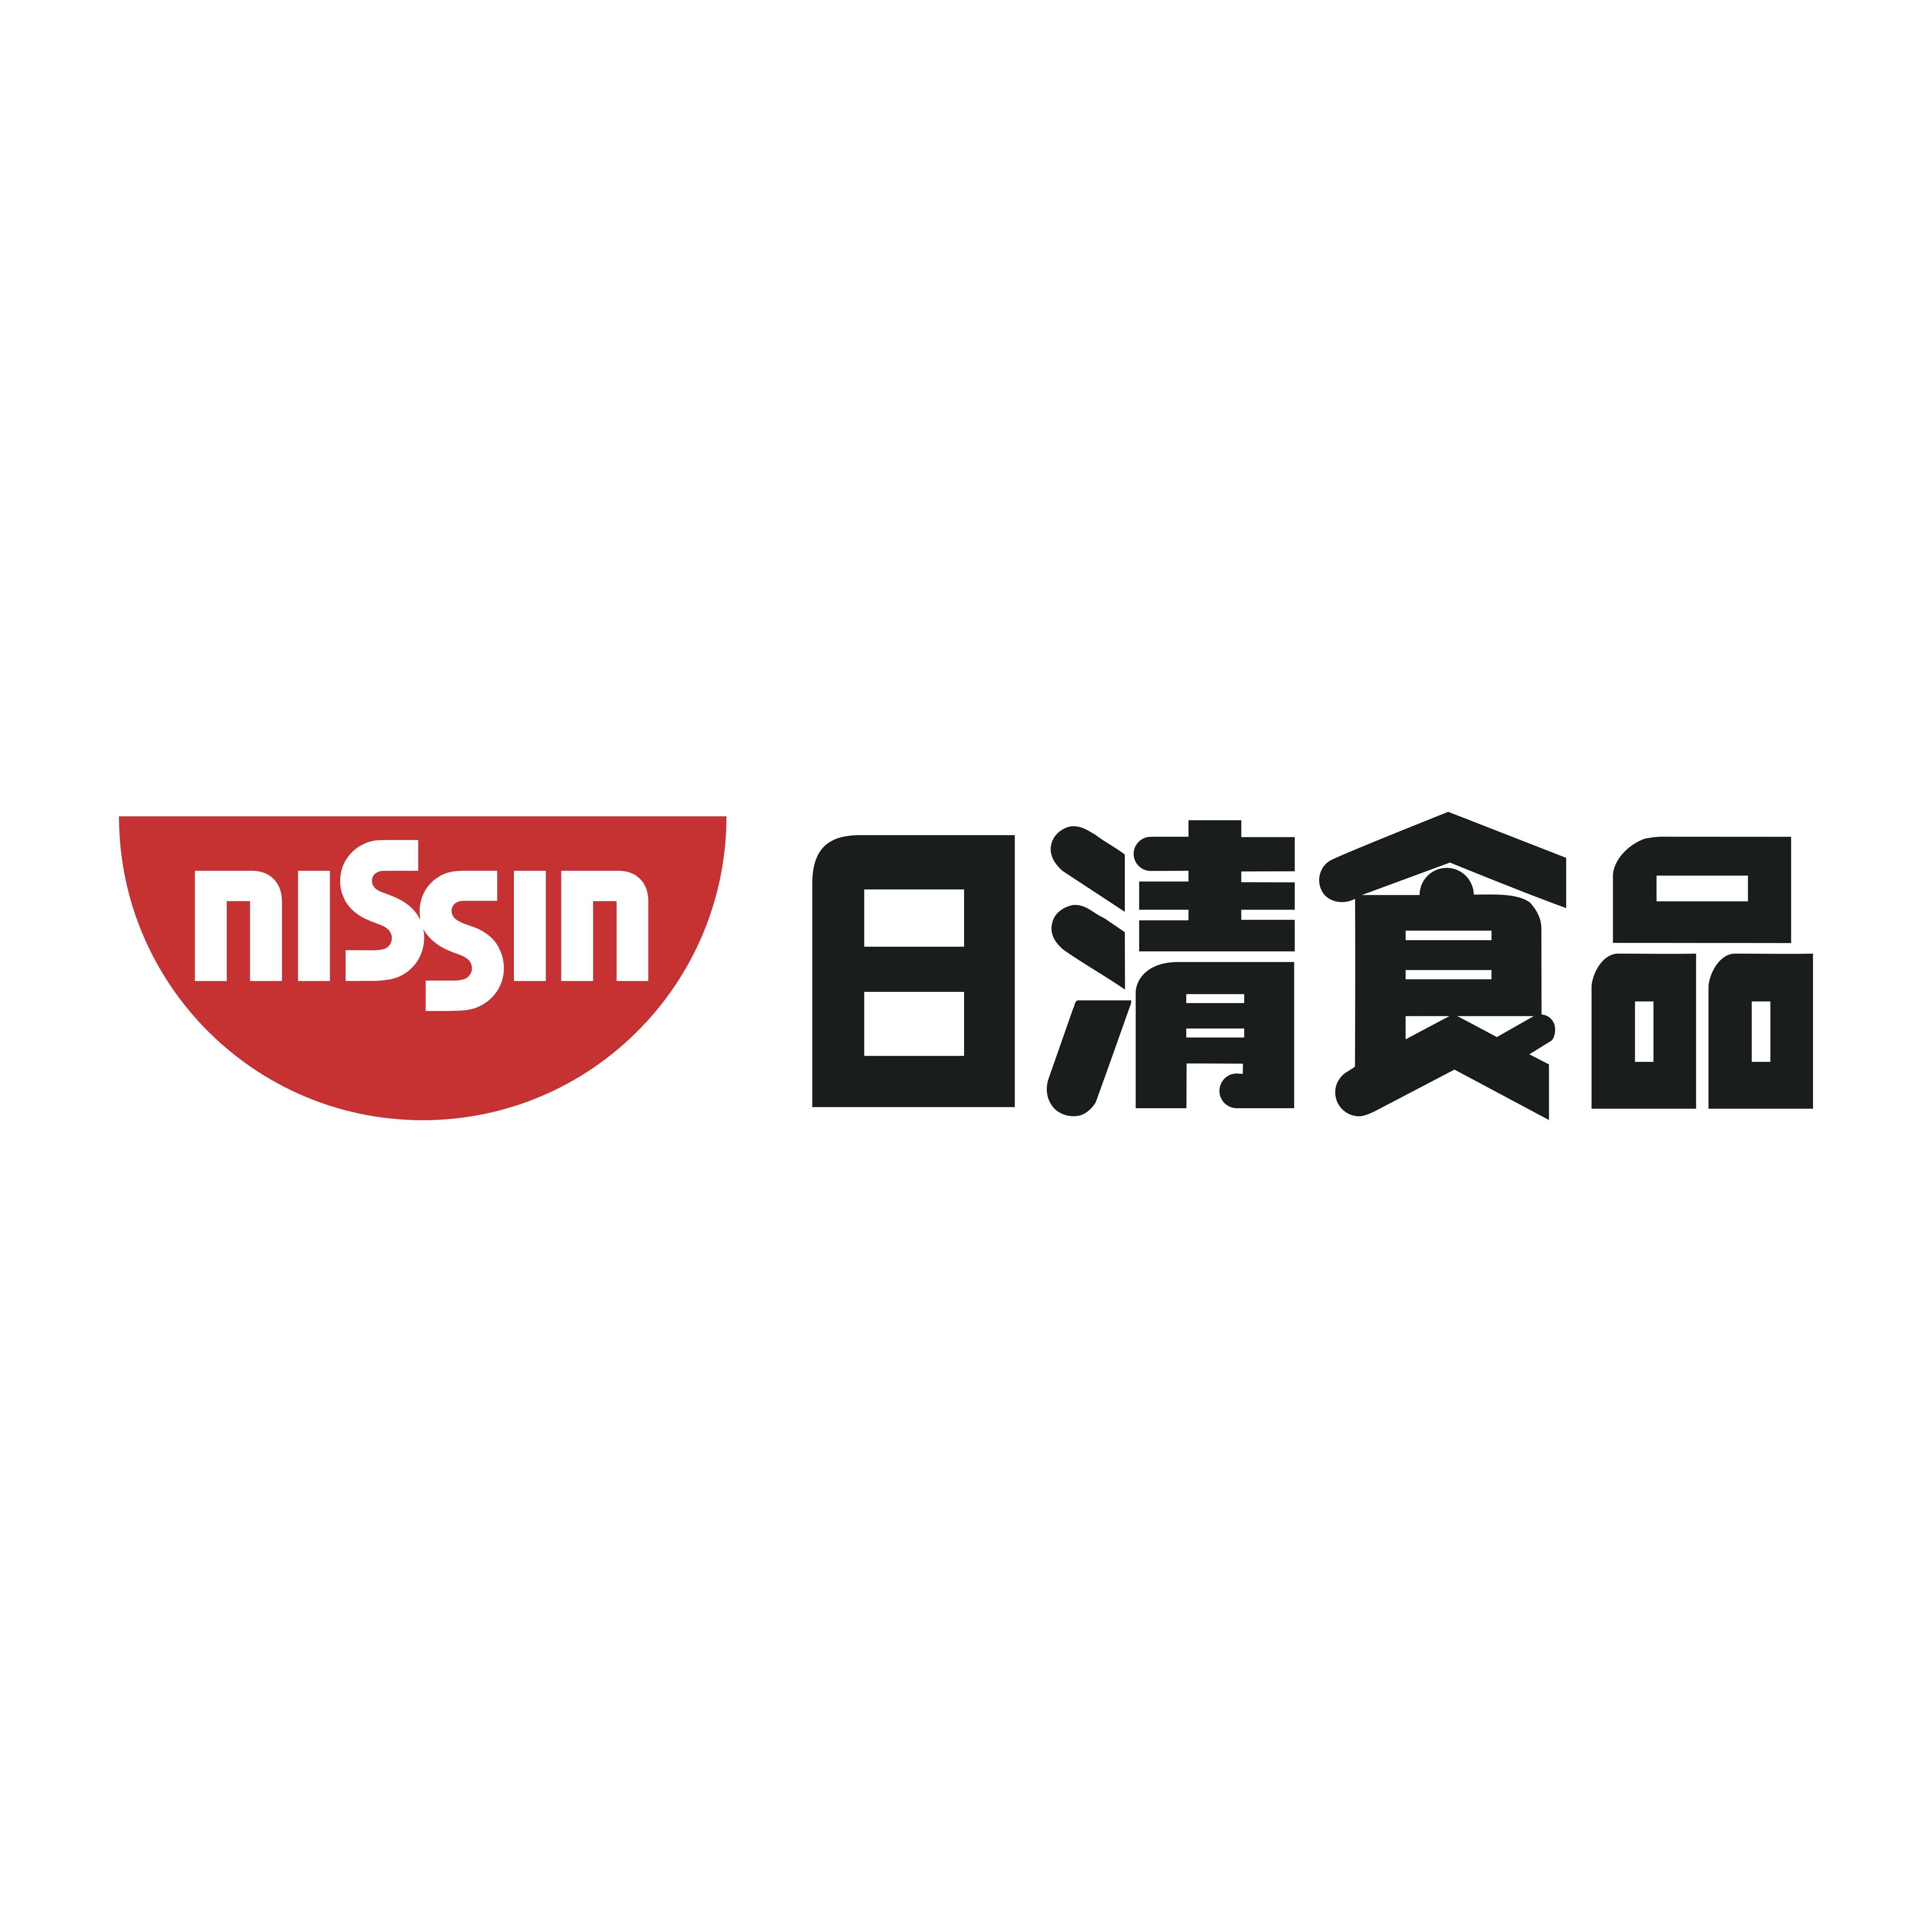 Nissin – Logos Download